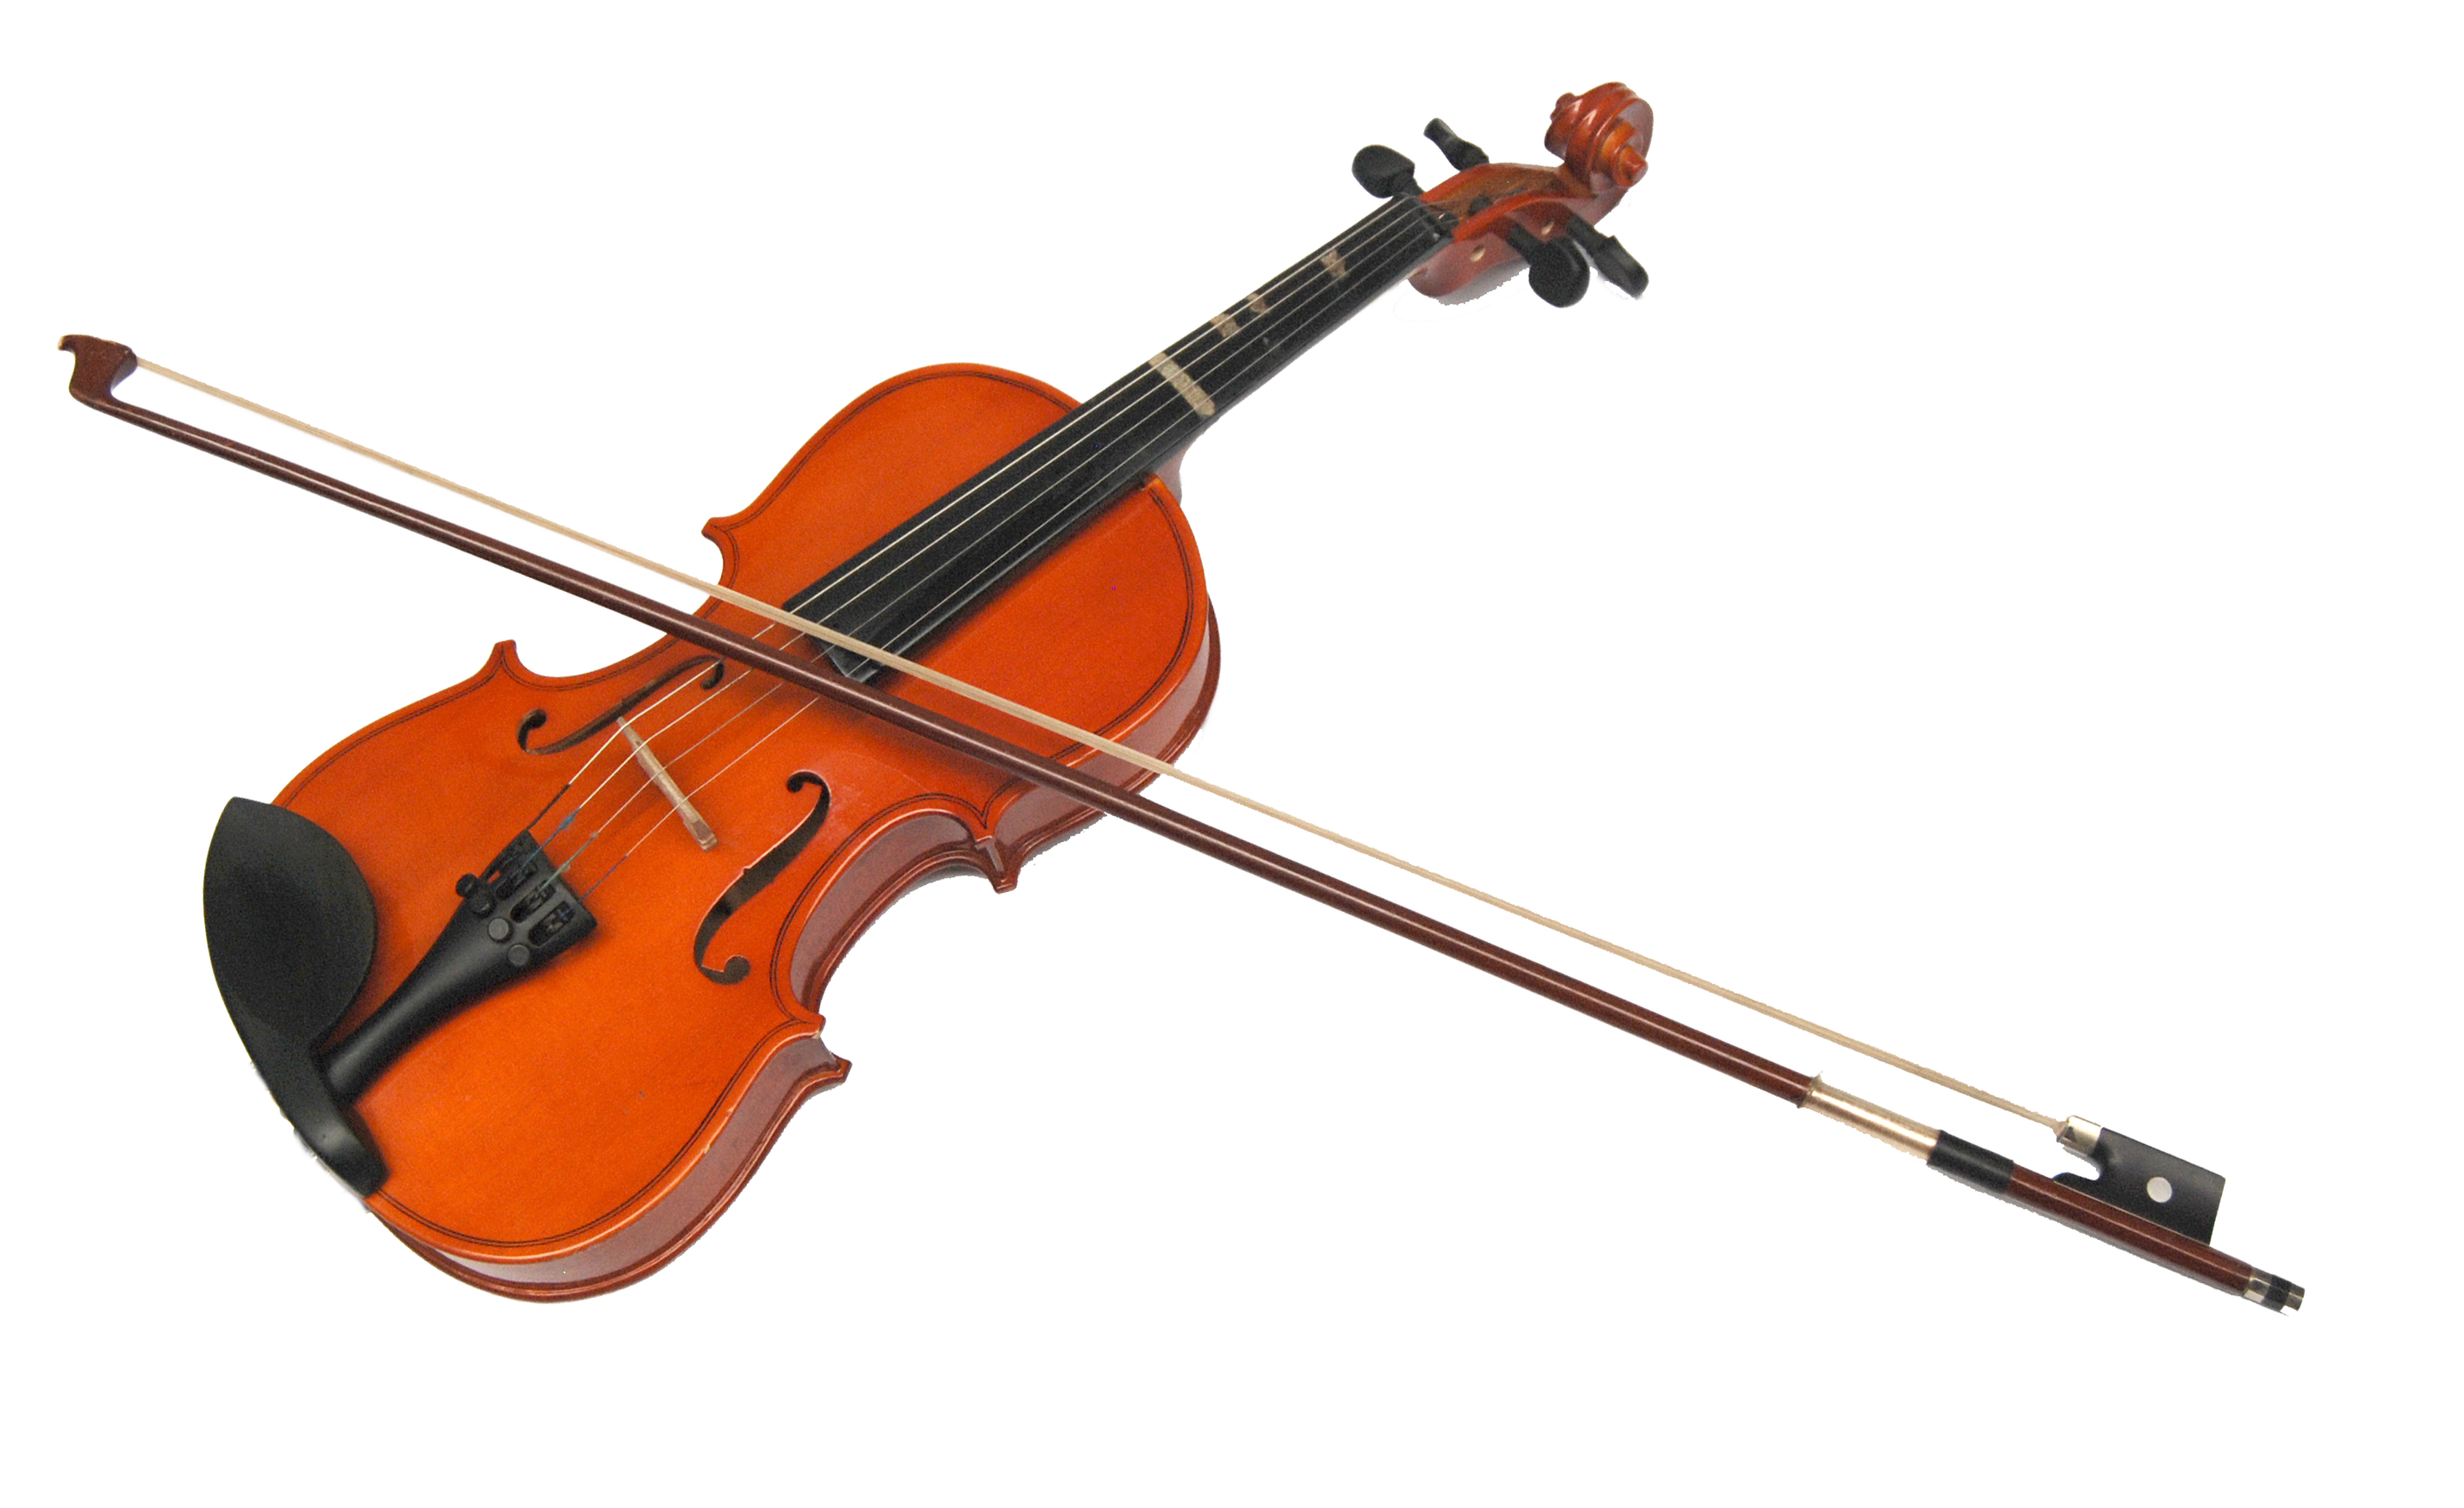 instruments clipart fiddle